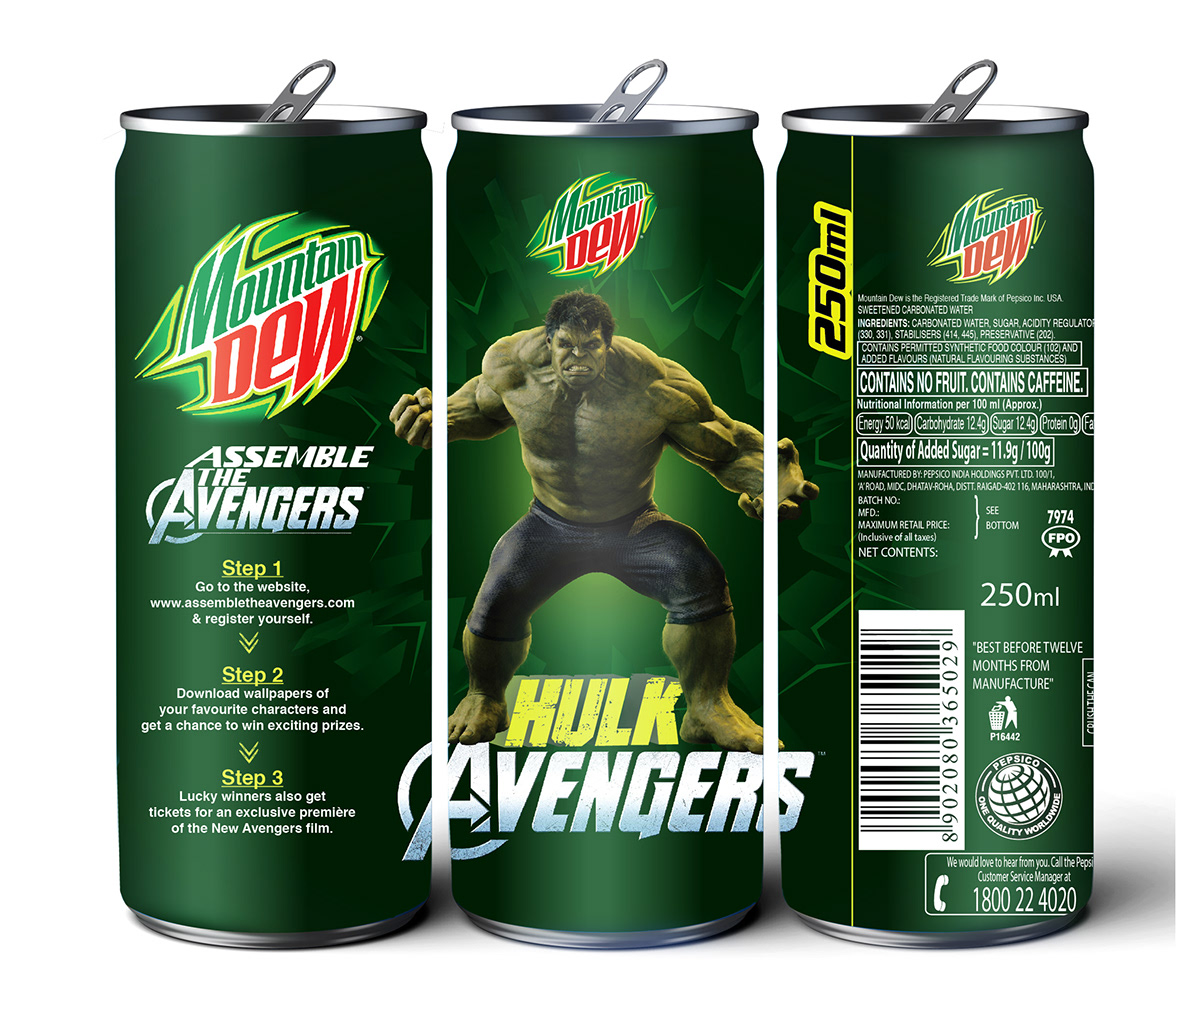 Mountain Dew Avengers